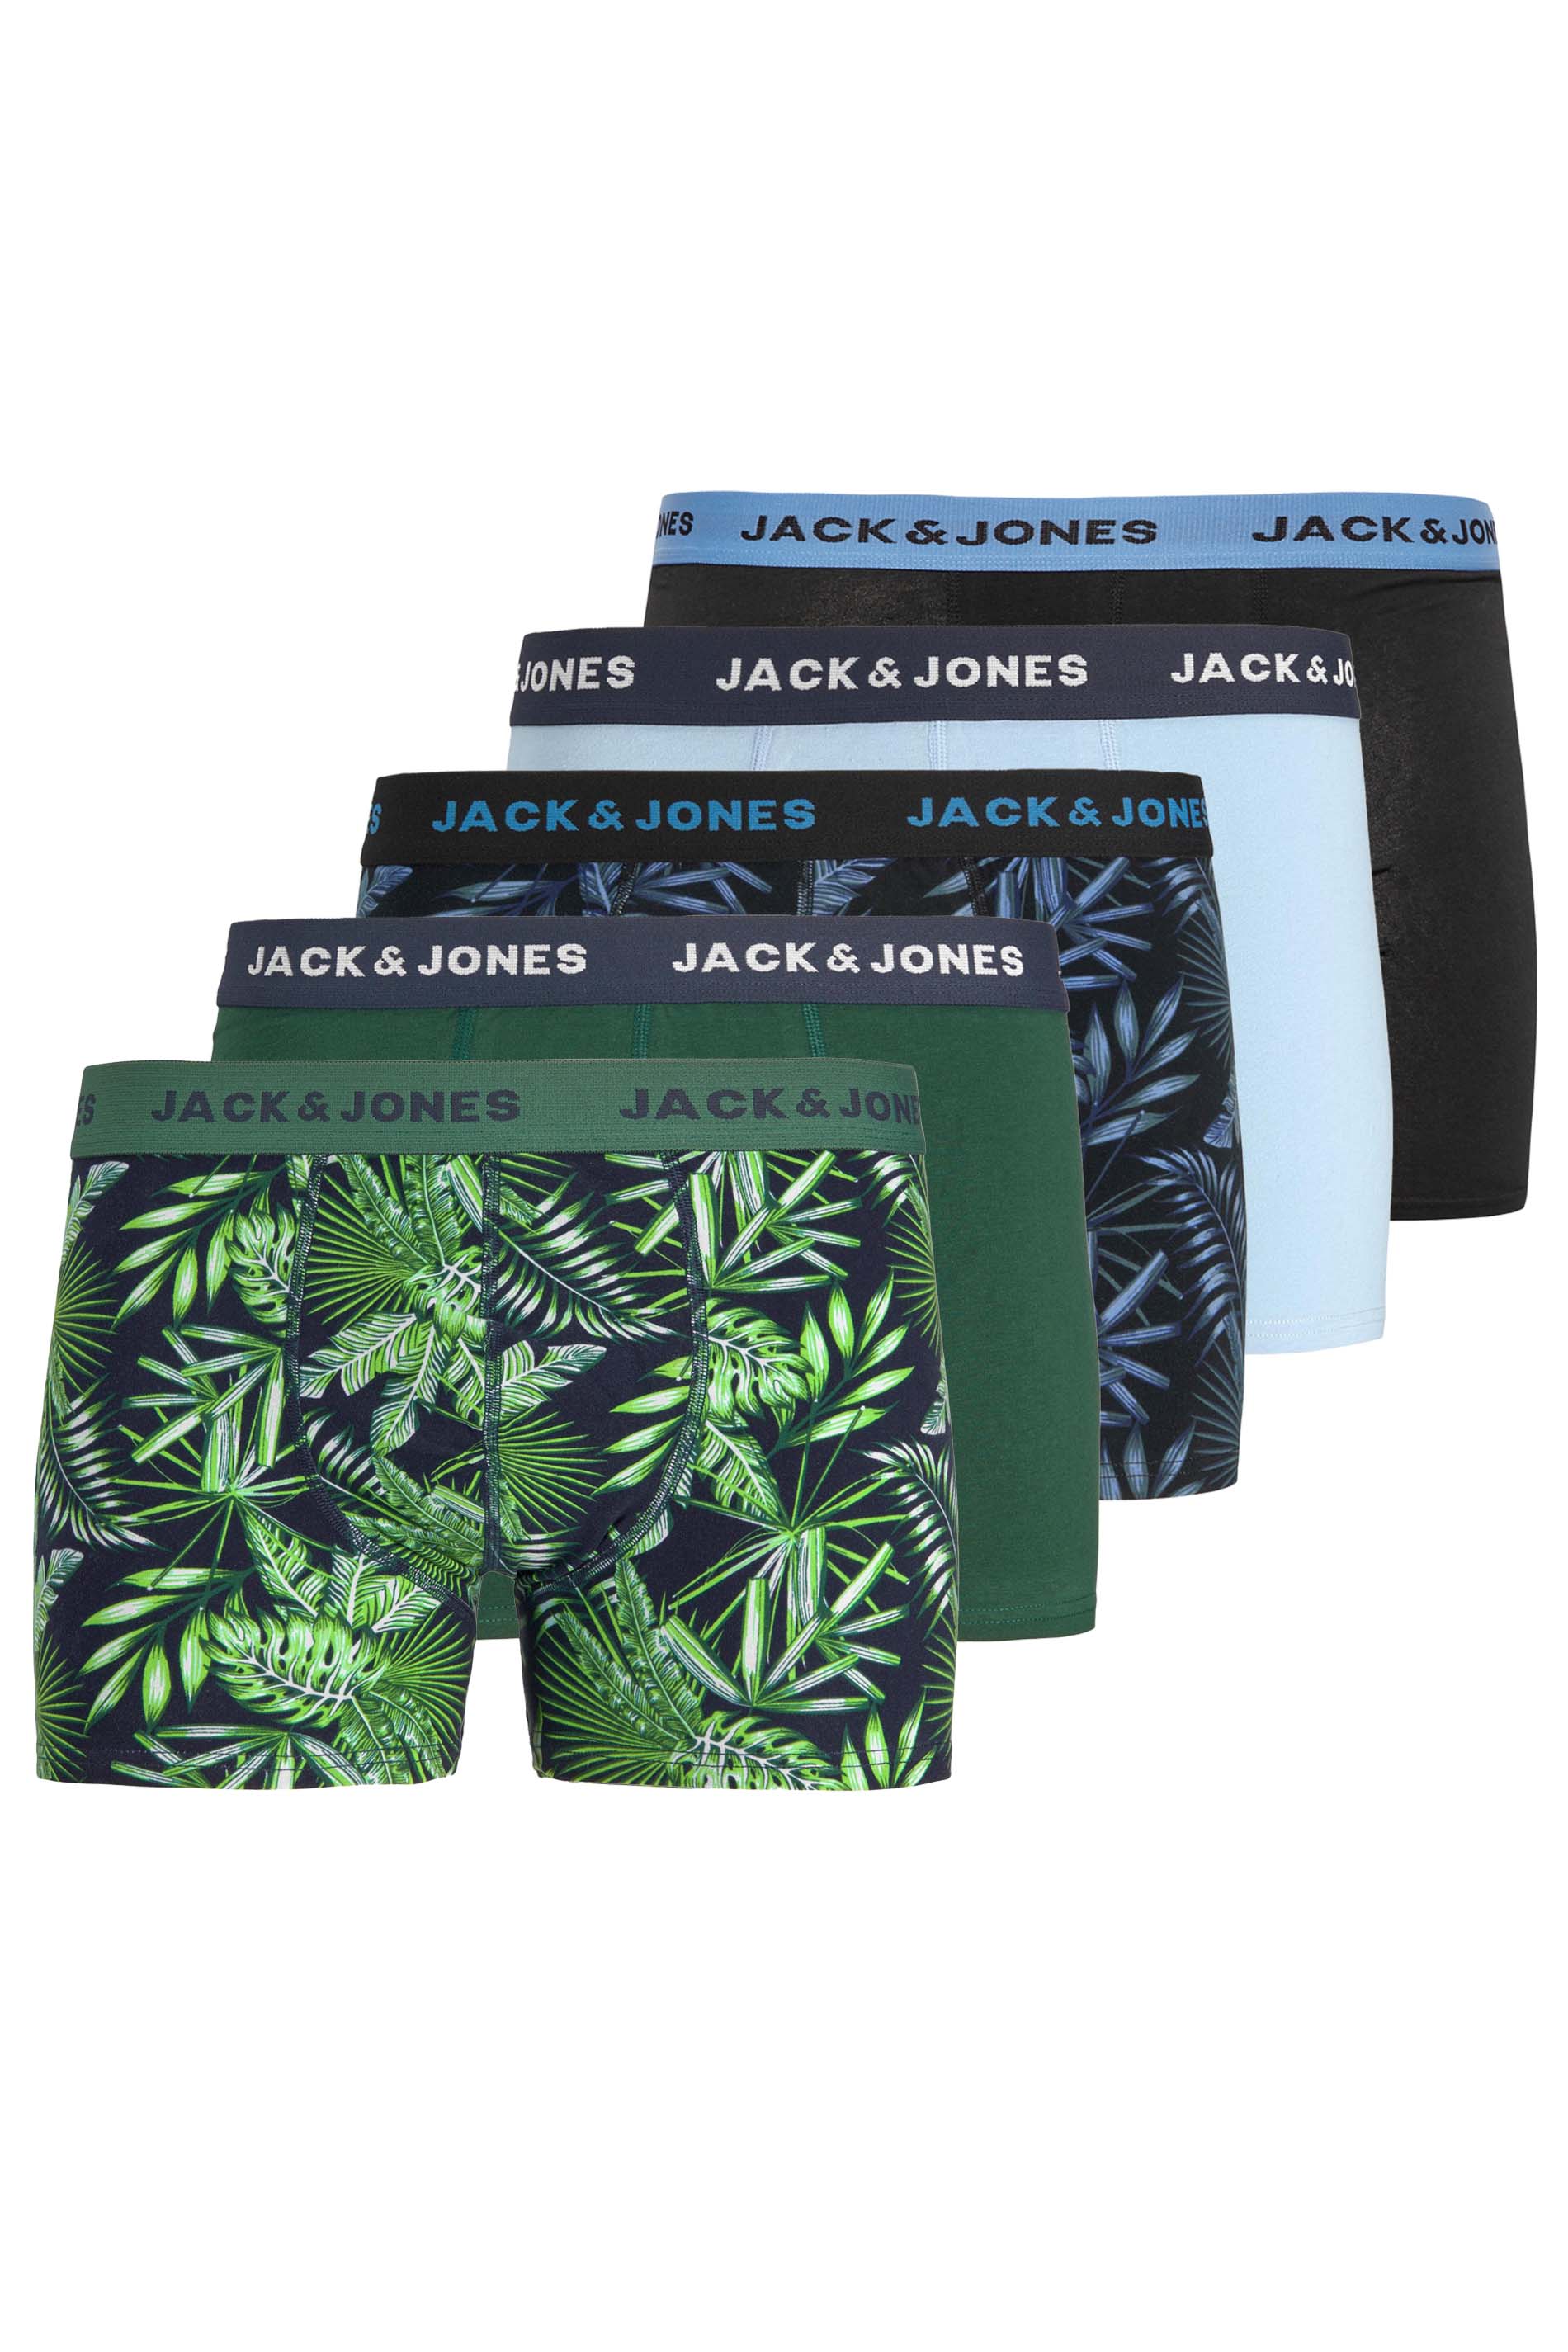 JACK & JONES Big & Tall 5 PACK Black & Green Palm Print Logo Boxers | BadRhino 1